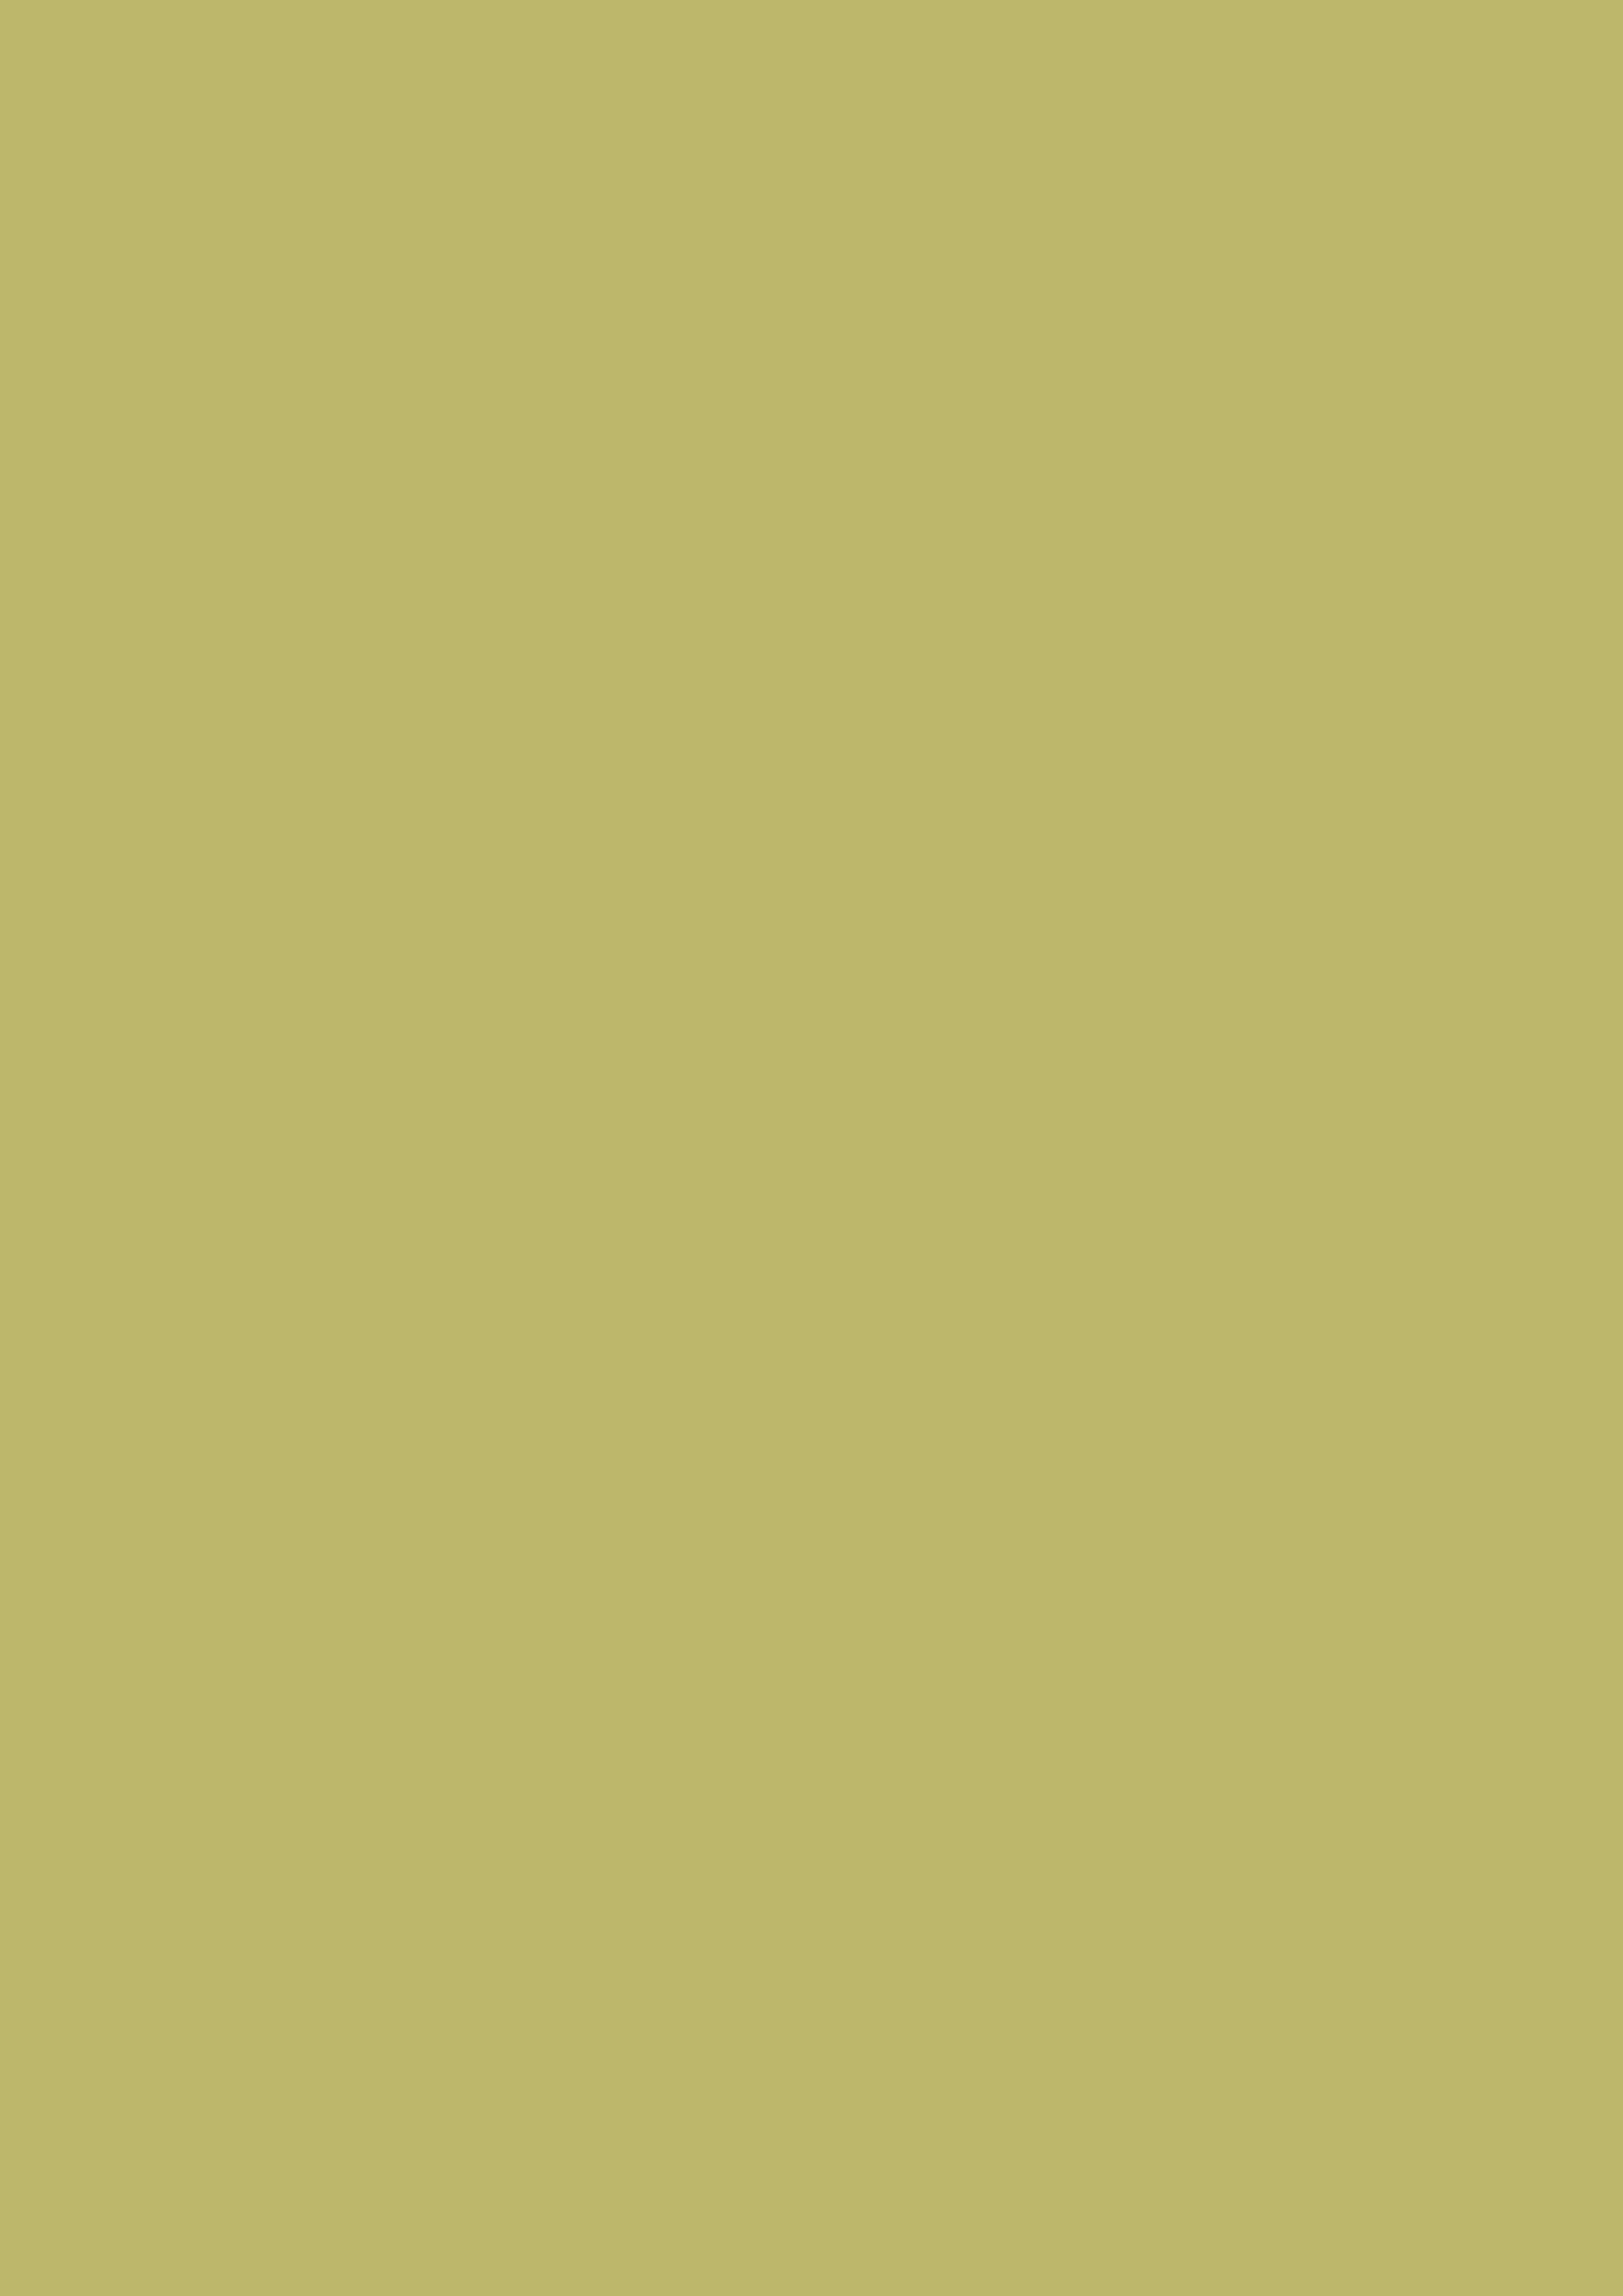 2480x3508 Dark Khaki Solid Color Background